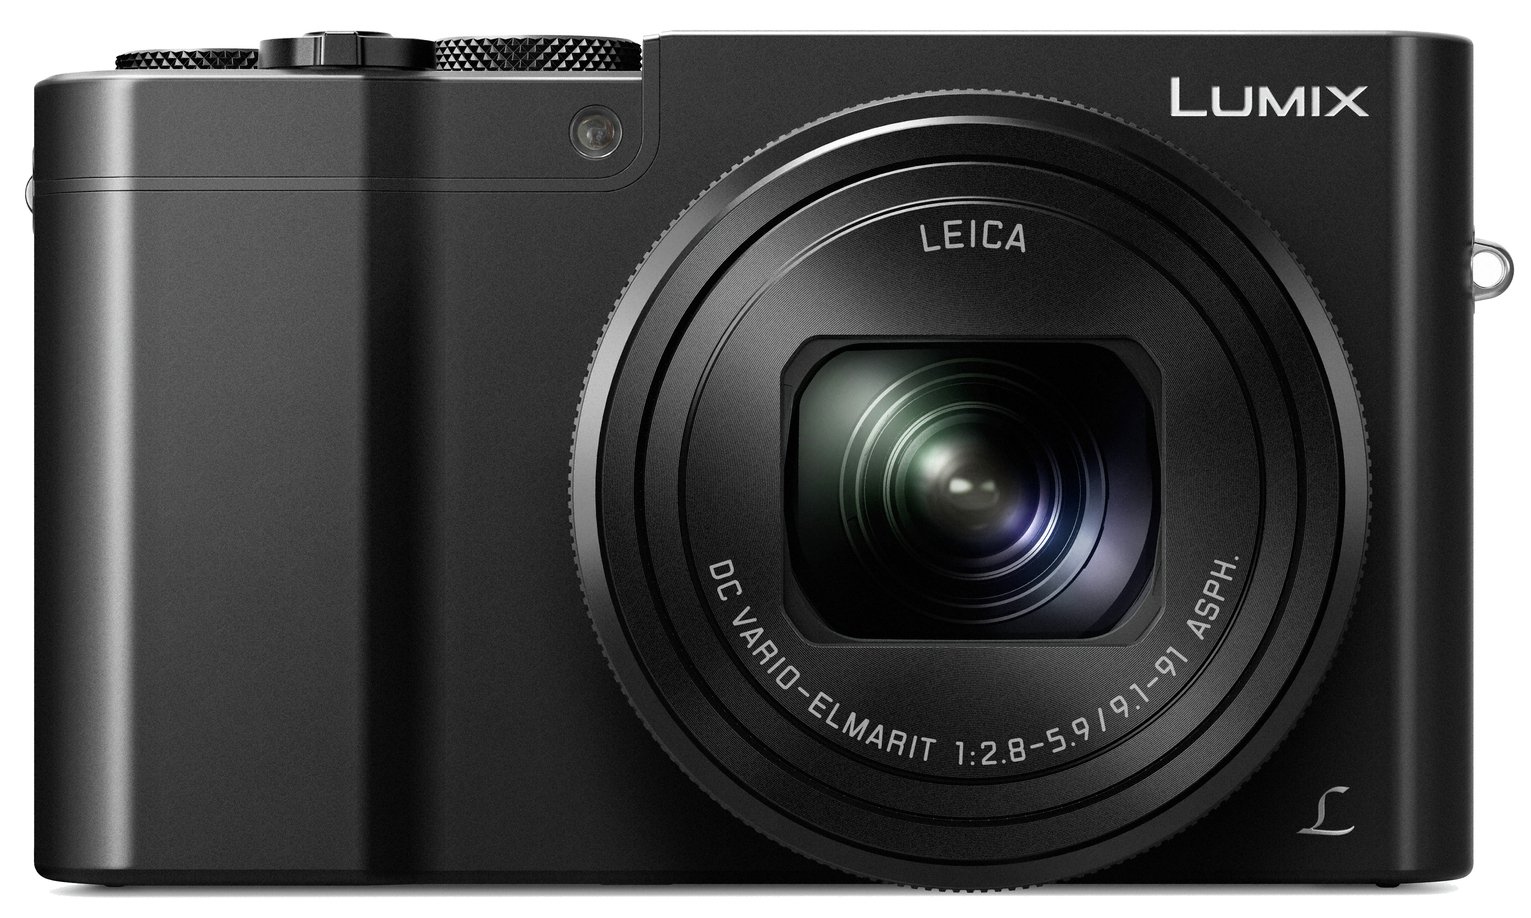 Panasonic Lumix DC-TZ100 Superzoom Compact Camera Review